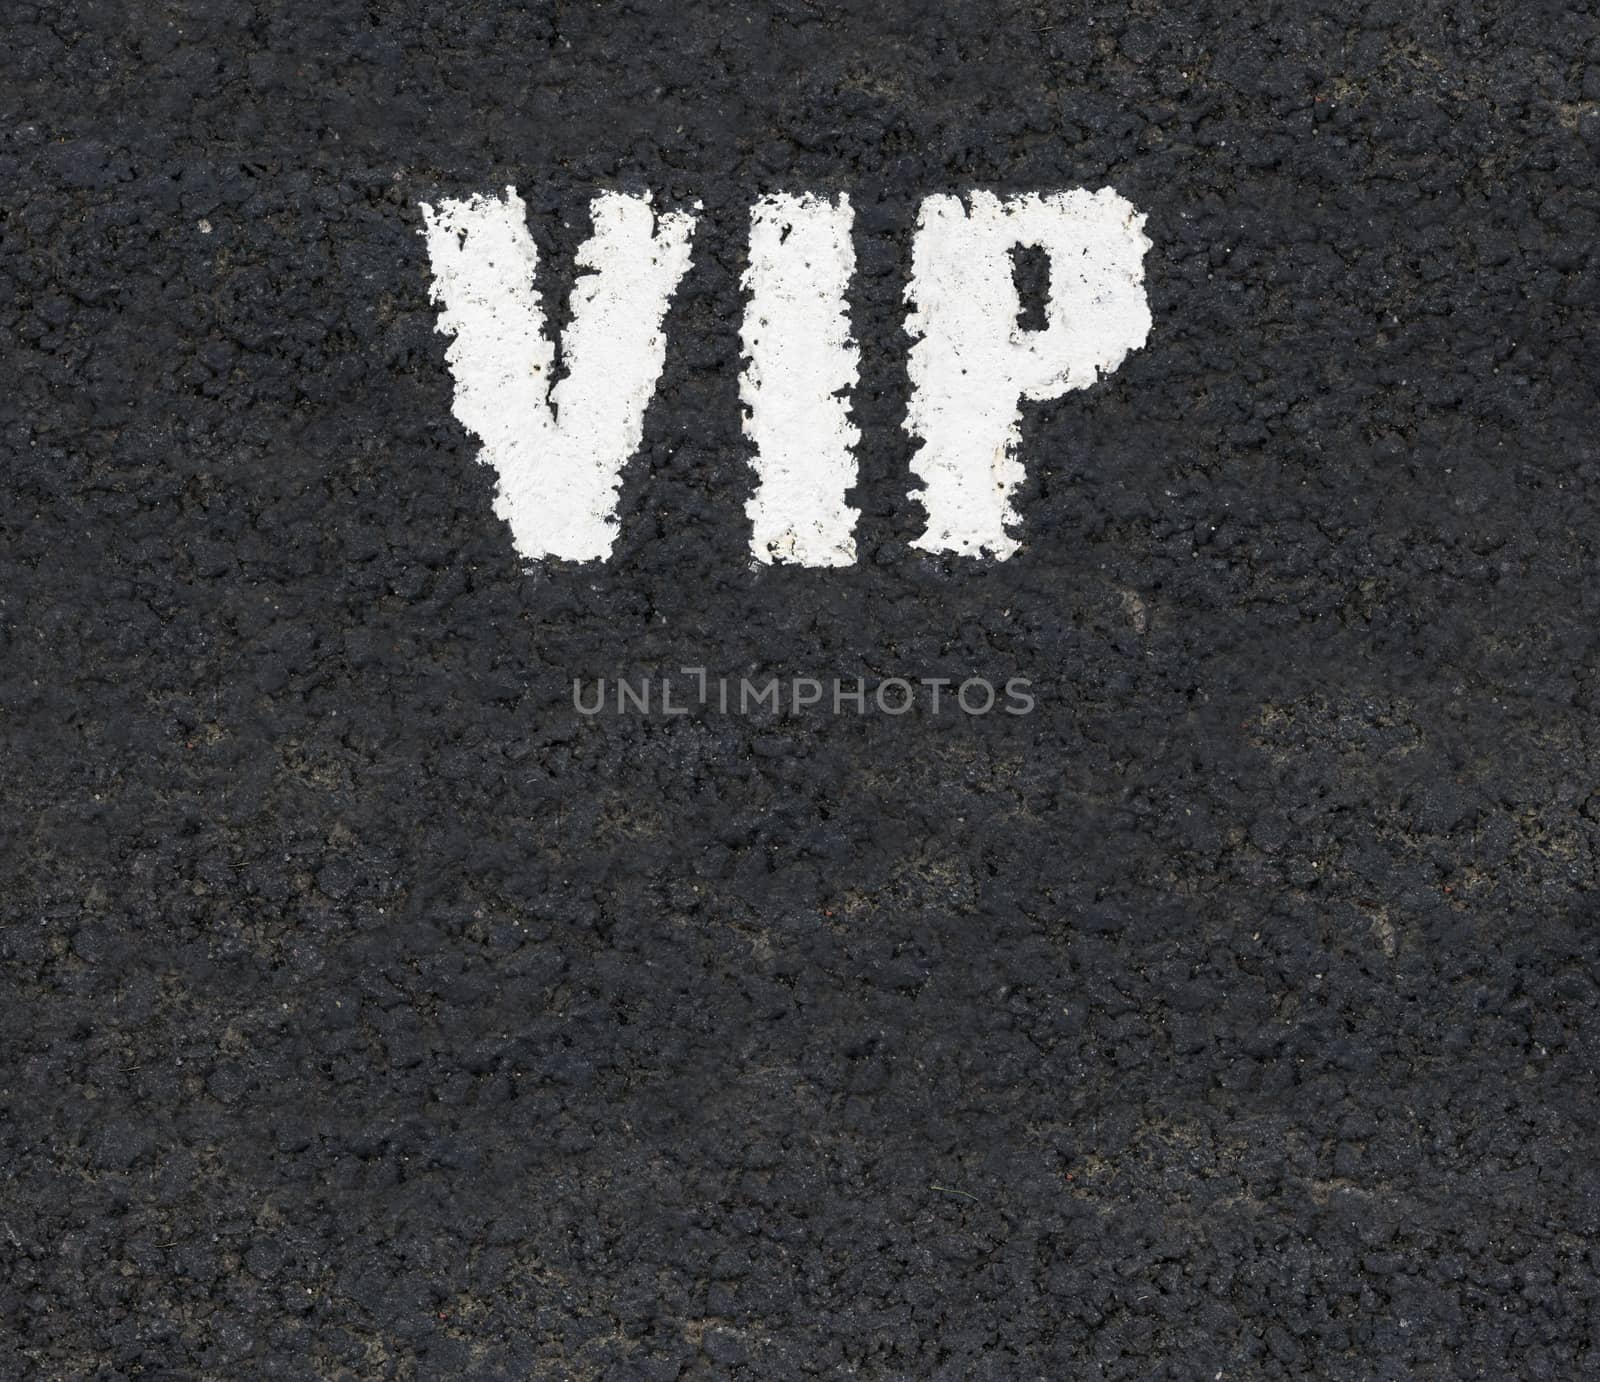 VIP Road Markings by mrdoomits